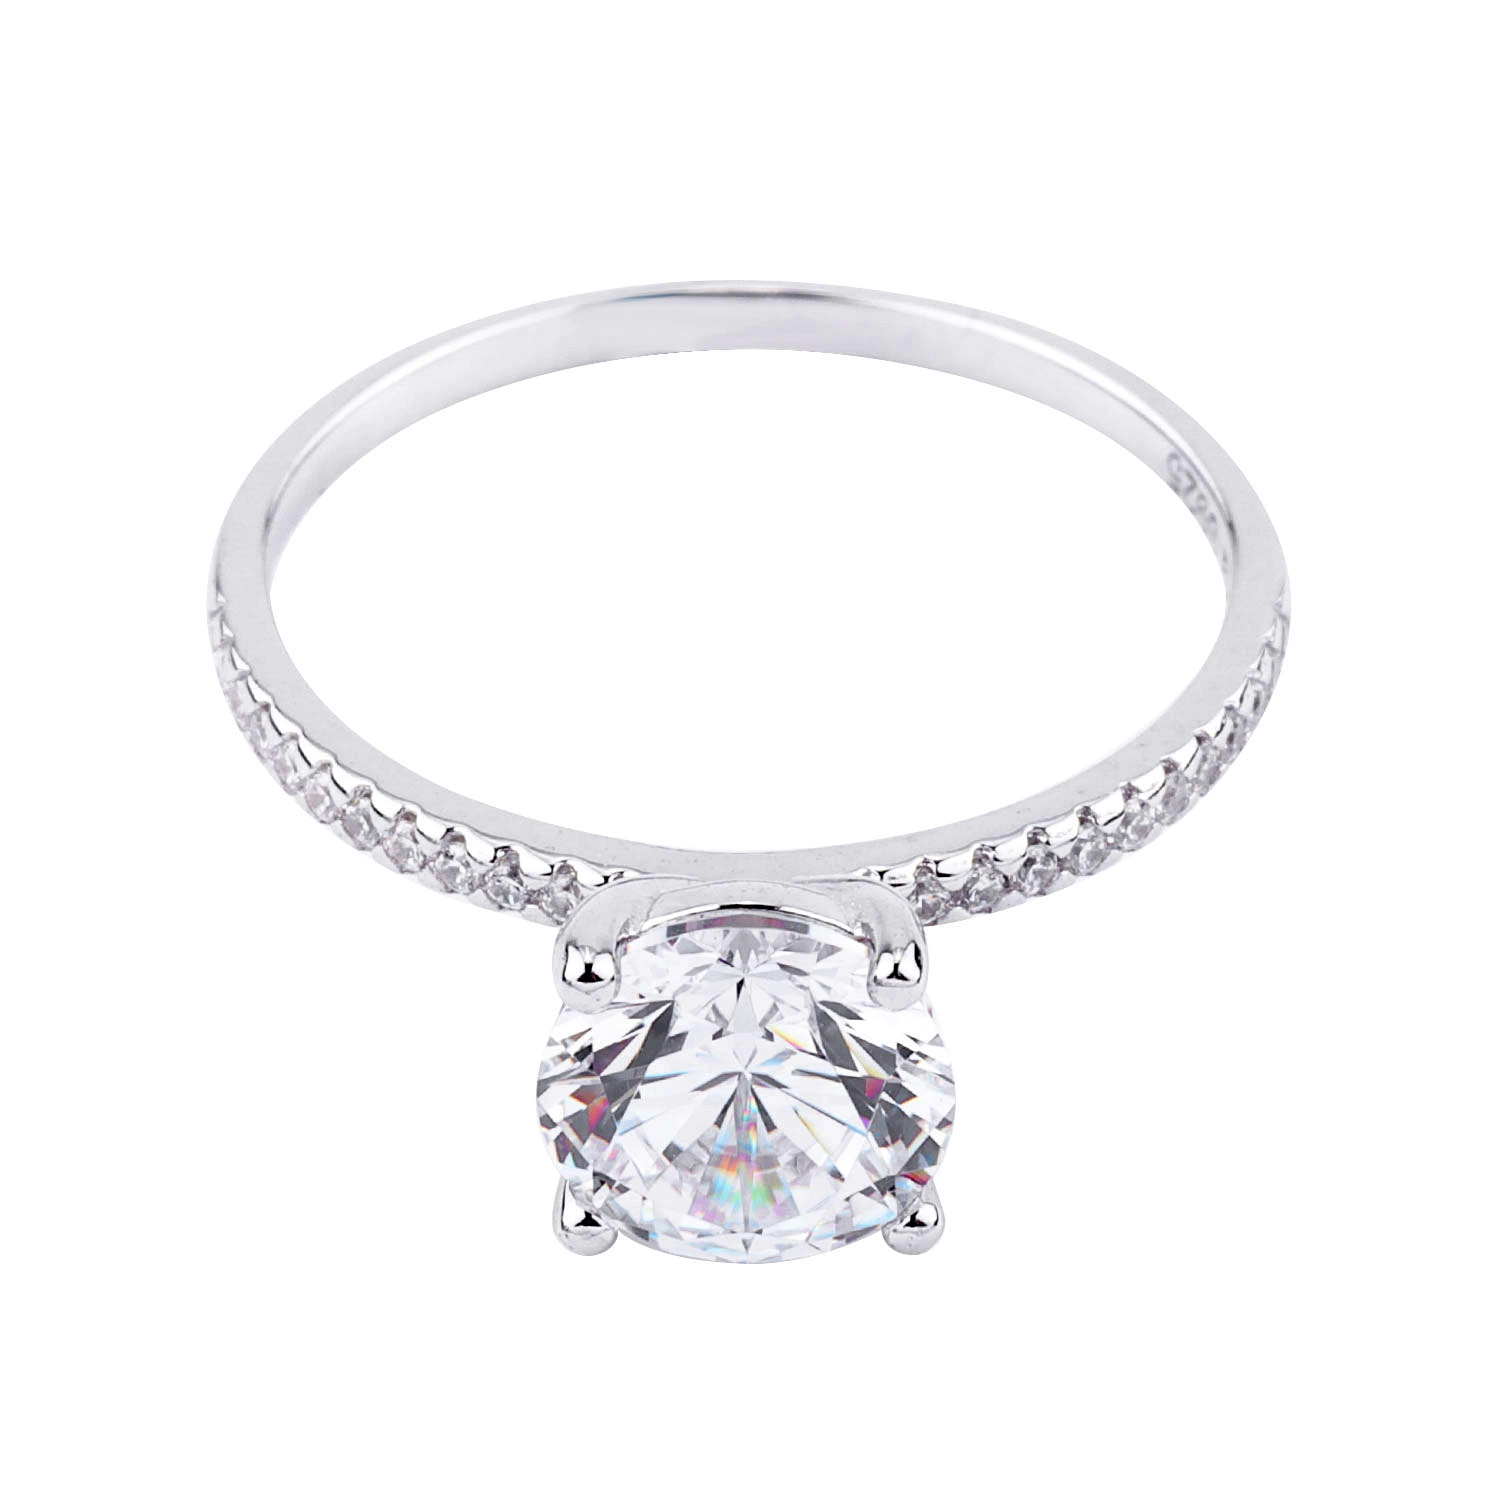 Дизайн Simple Fashion Gift Sterling Silver Jewelry Свадебные кольца для Женщины Оптовая торговля